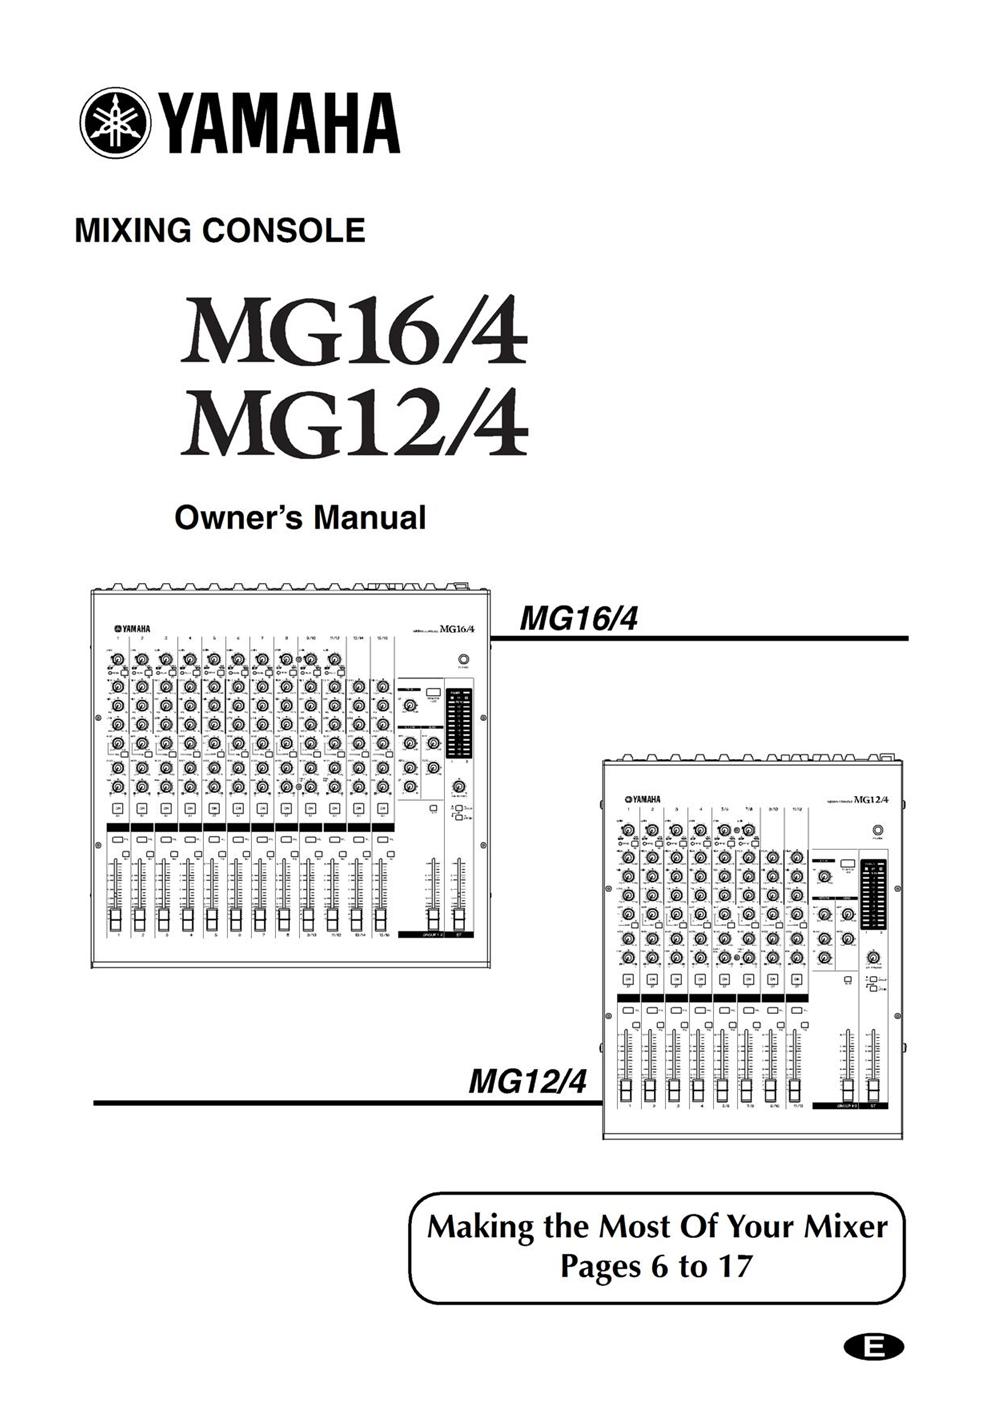 Yamaha MG16/4 Manual :: sori's